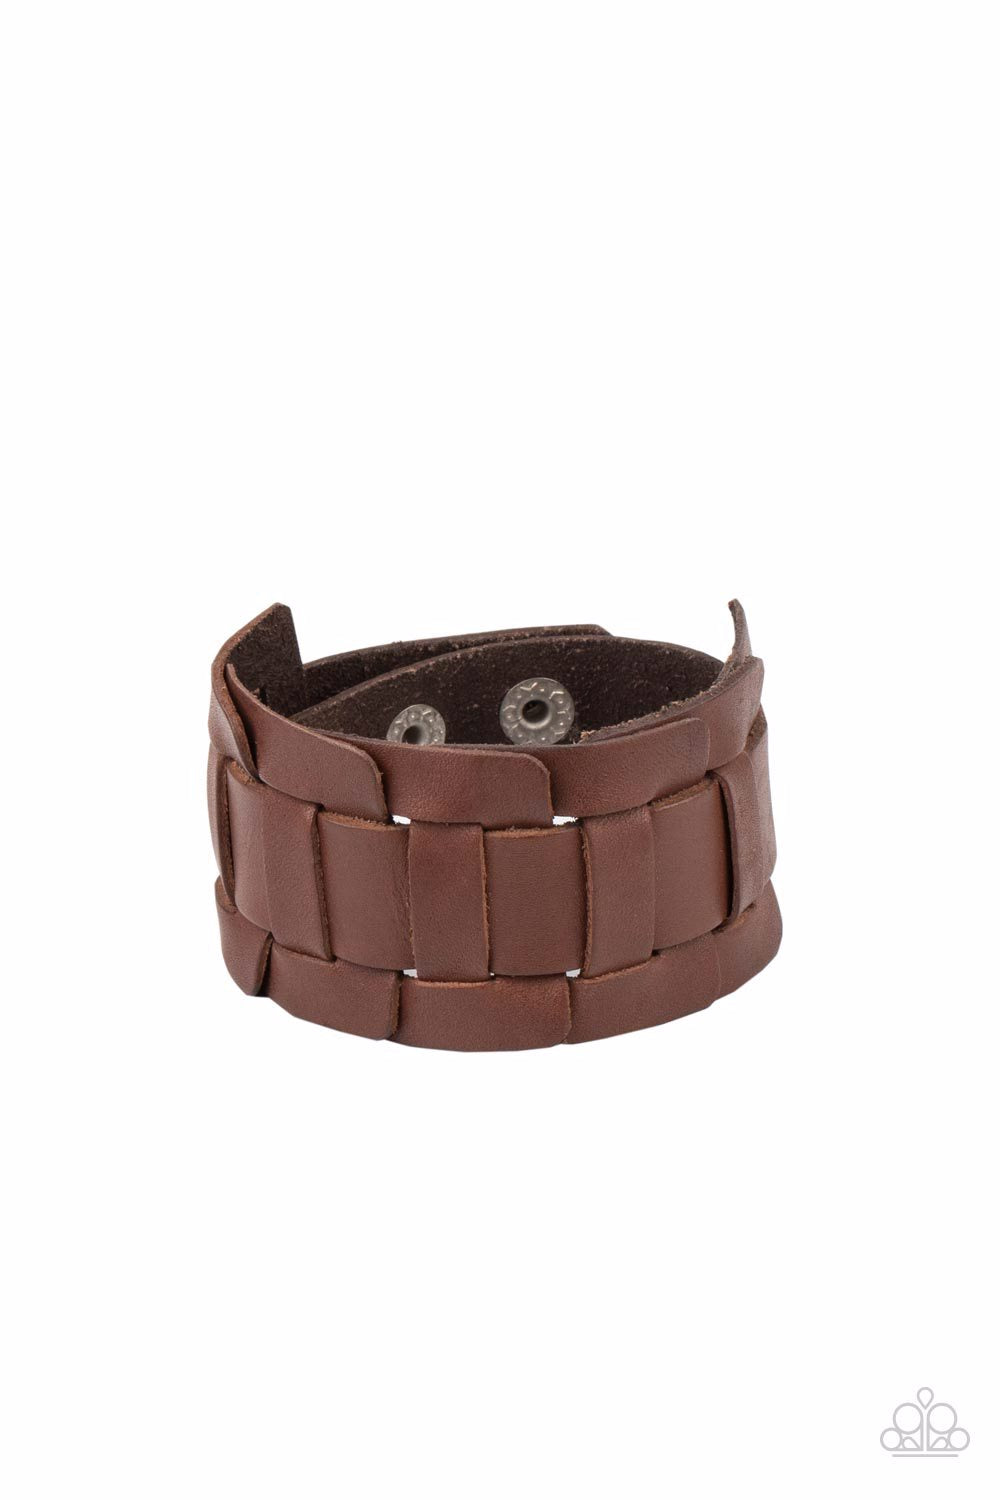 Plainly Plaited - Brown Bracelet